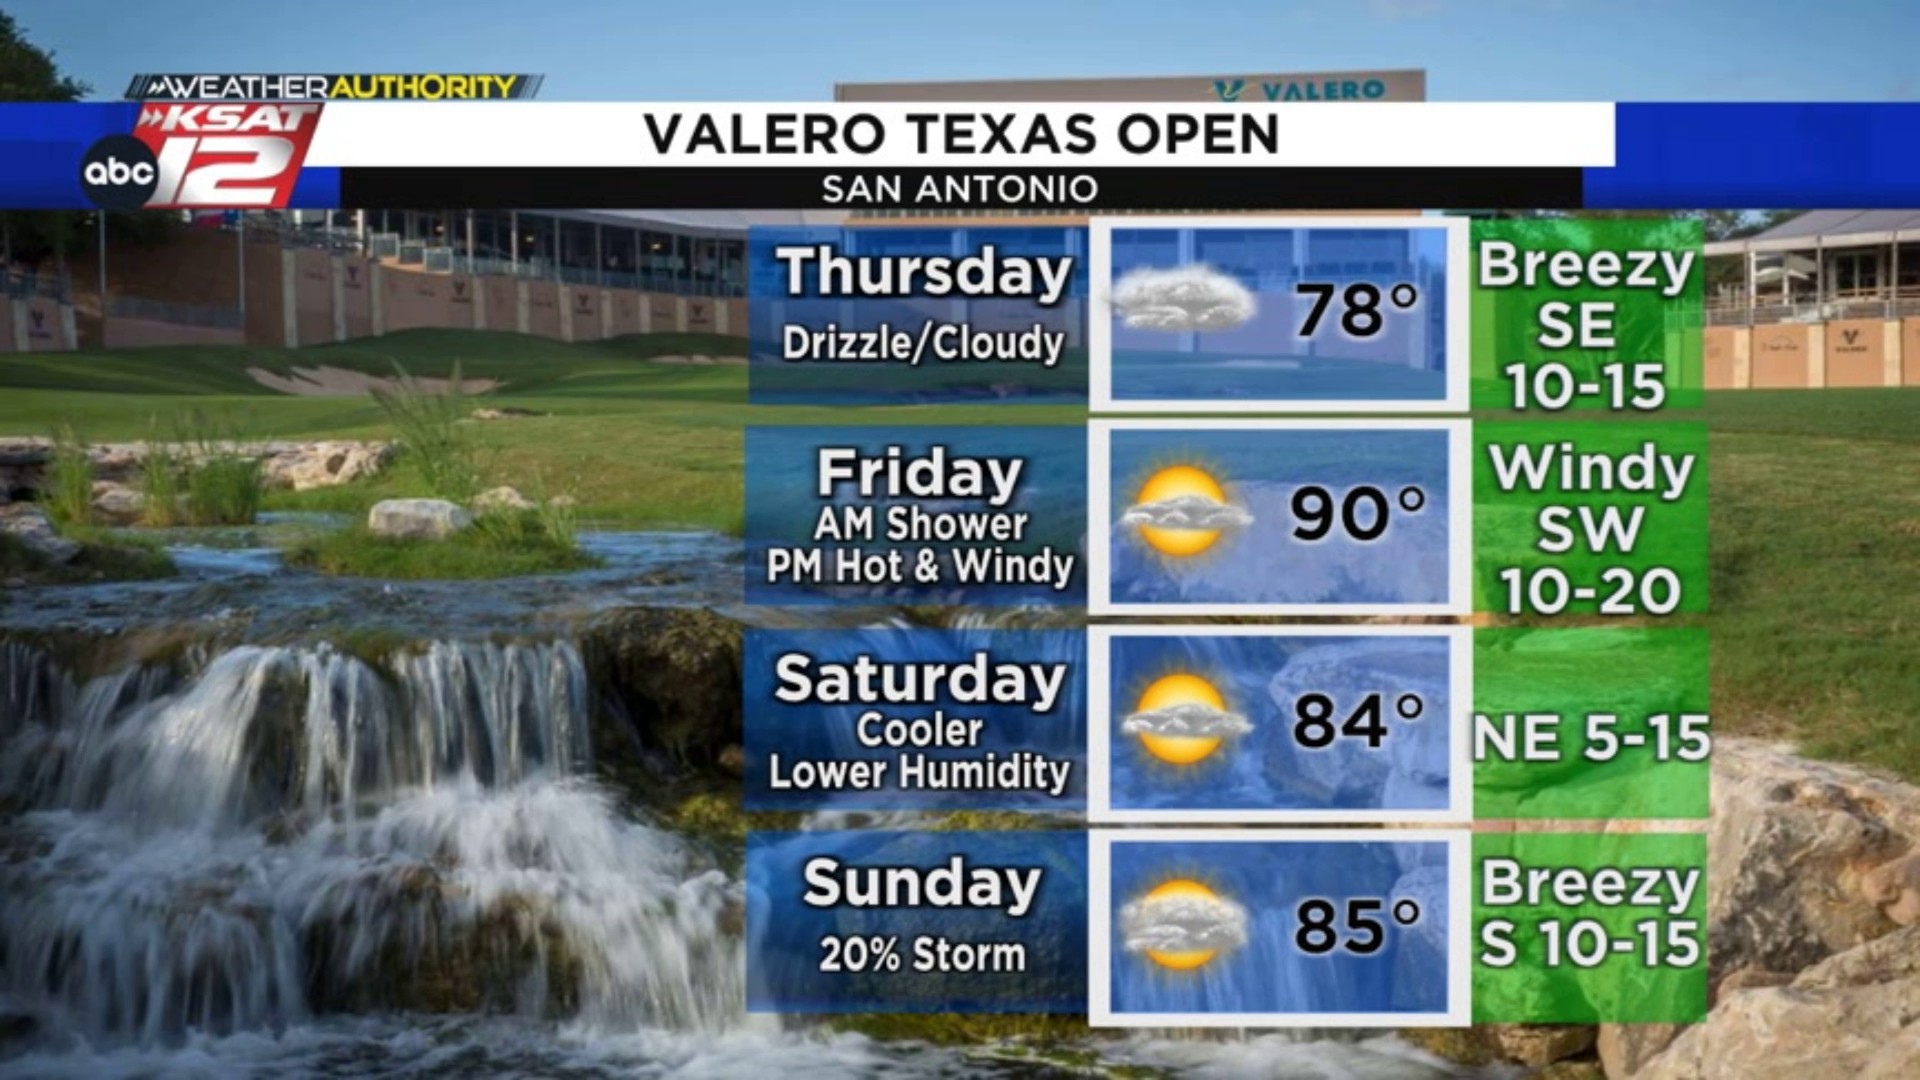 San Antonio weather will provide plenty of challenges to PGA golfers at Valero Texas Open